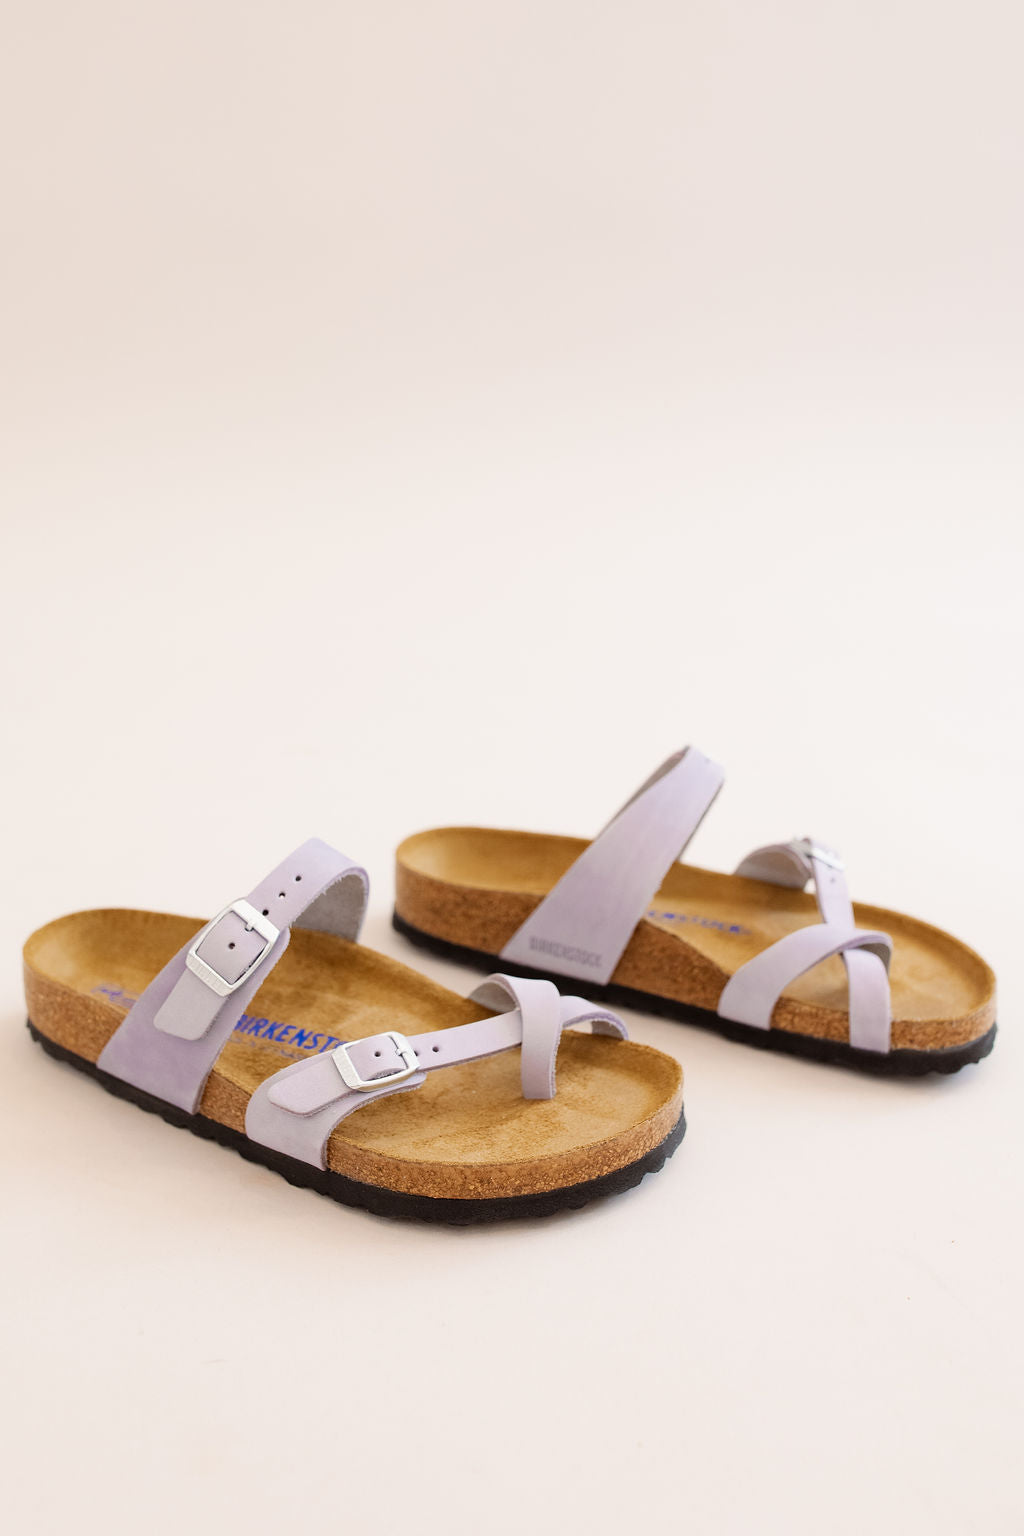 Birkenstock | Mayari Soft Footbed Sandal | Purple Fog - Poppy and Stella